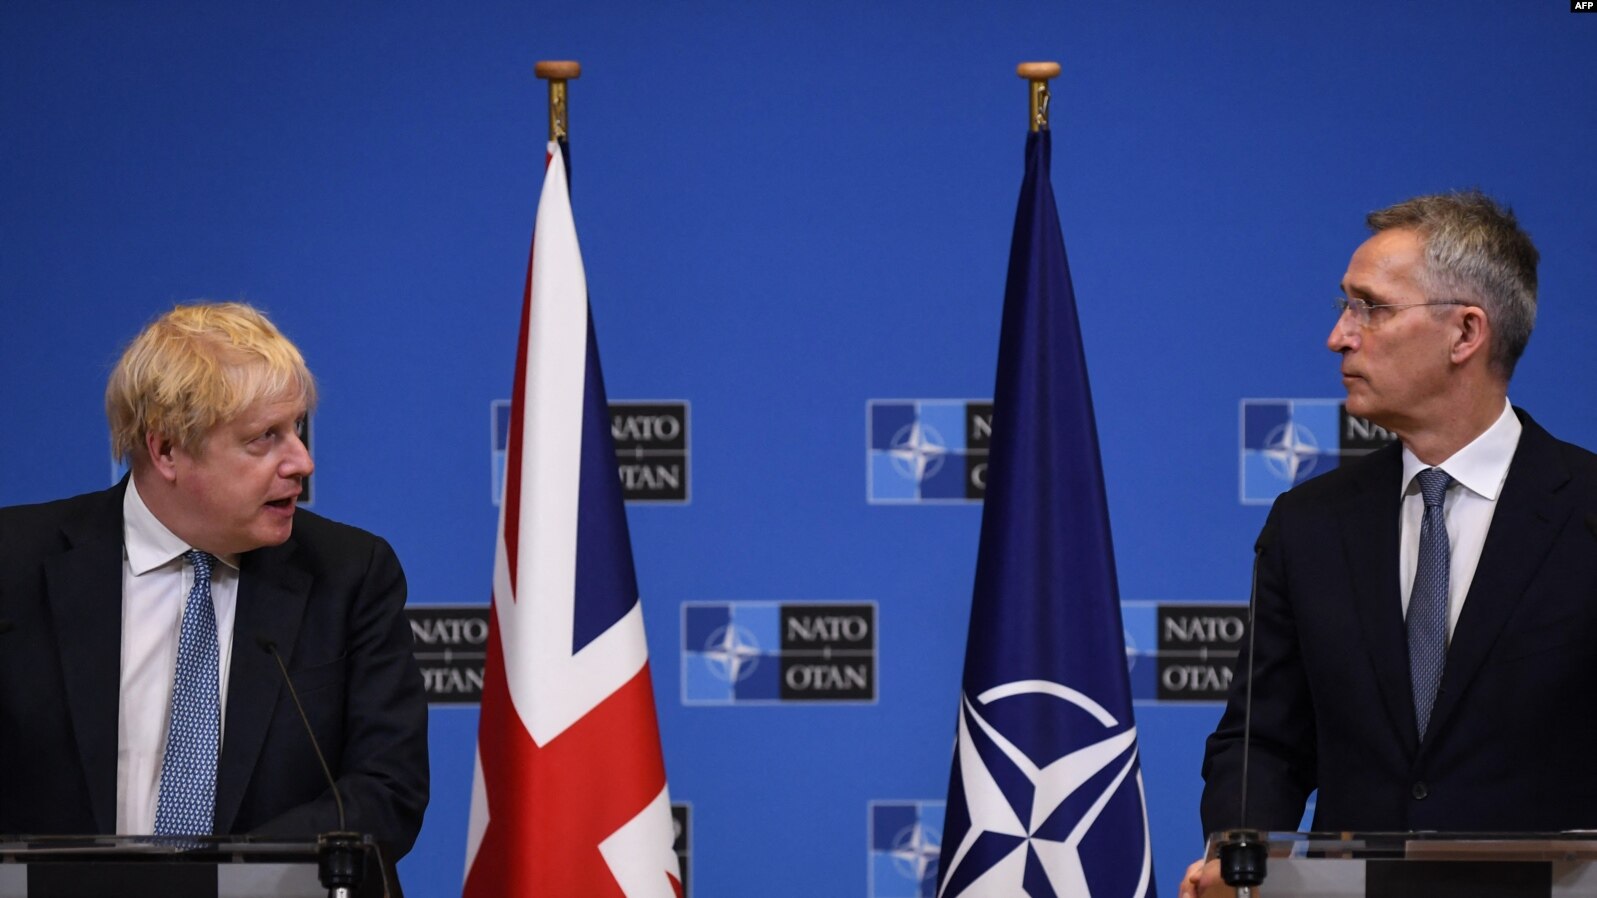 Нато конференции. Премьер министр Эстонии фот. Латвия и Эстония в НАТО.